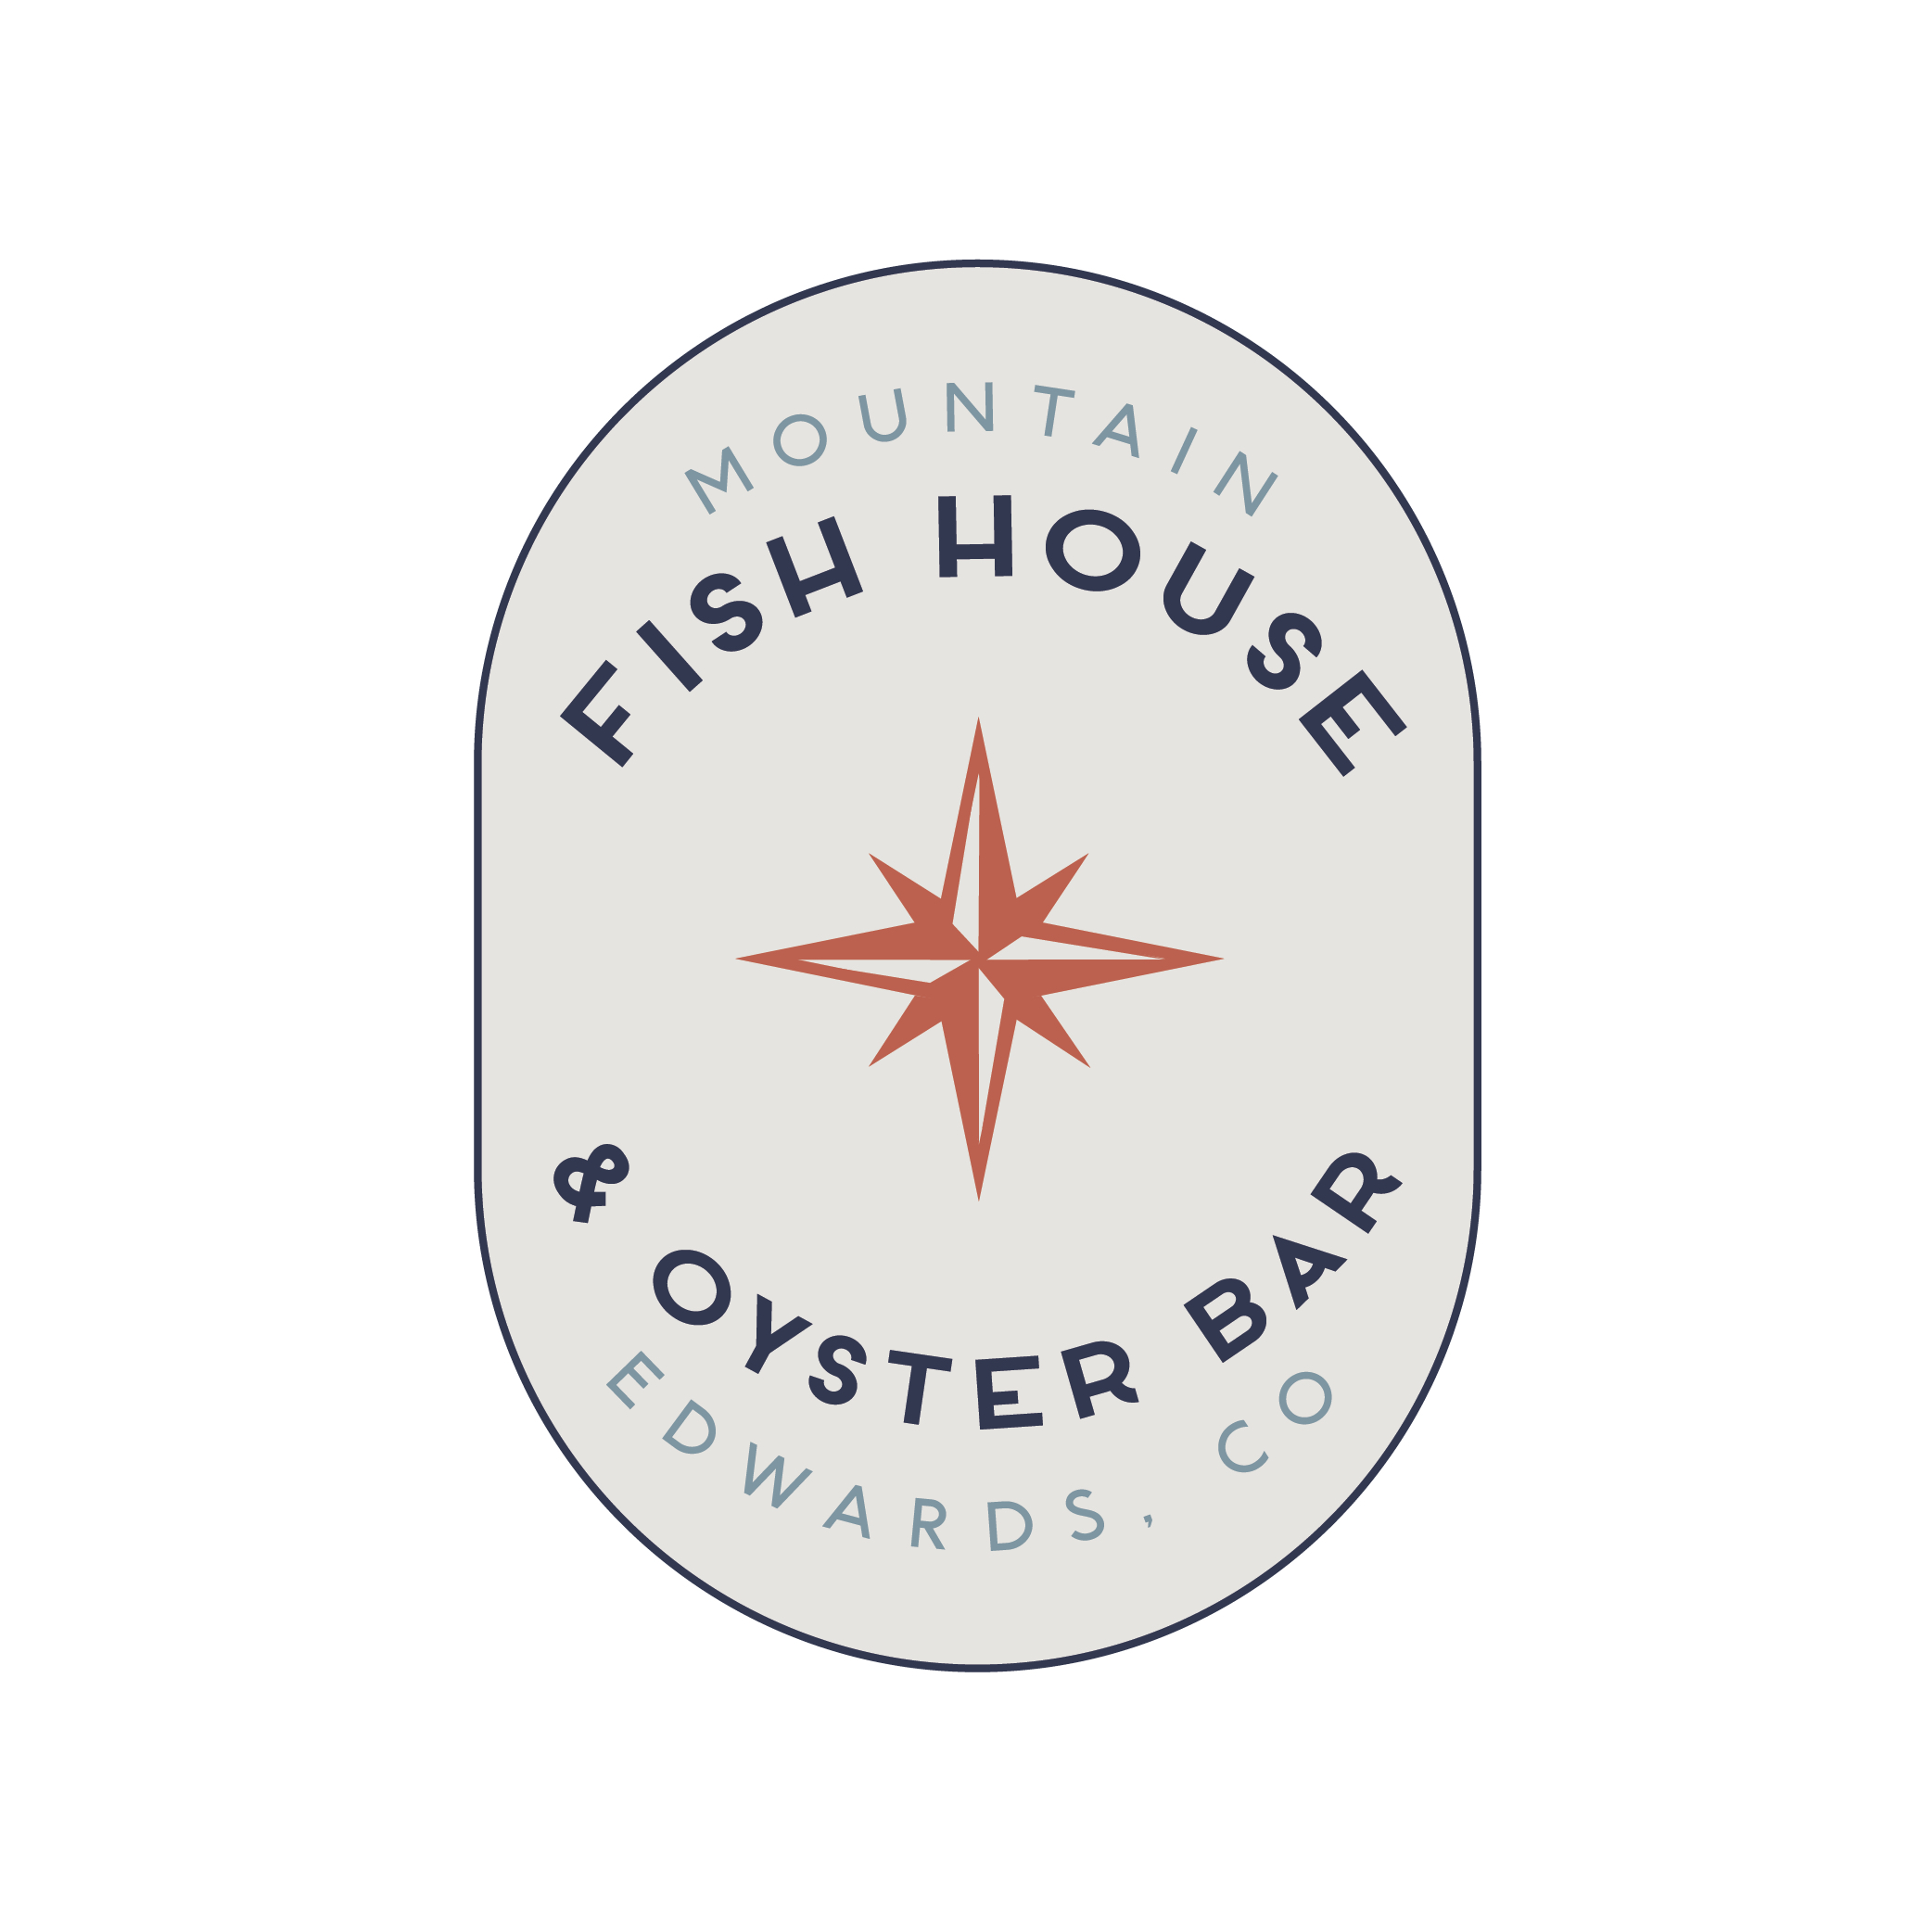 Mountain Fish House & Oyster Bar